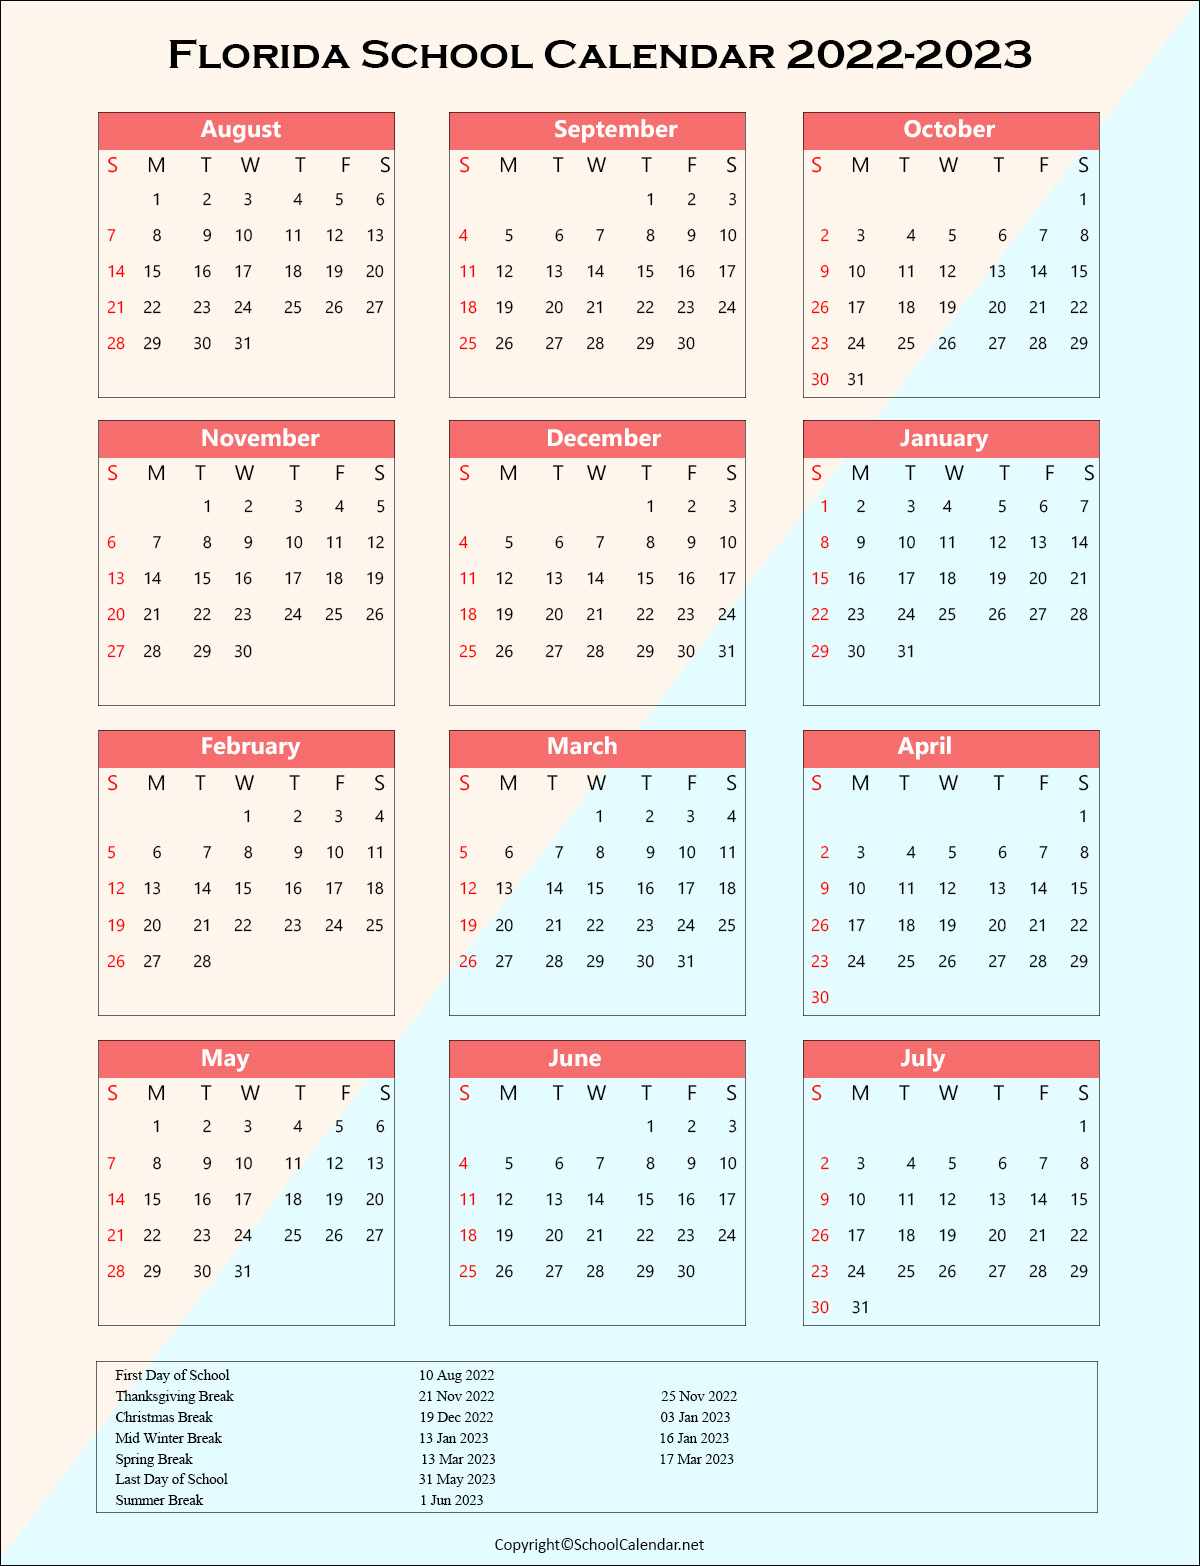 Florida School Holiday Calendar 2022